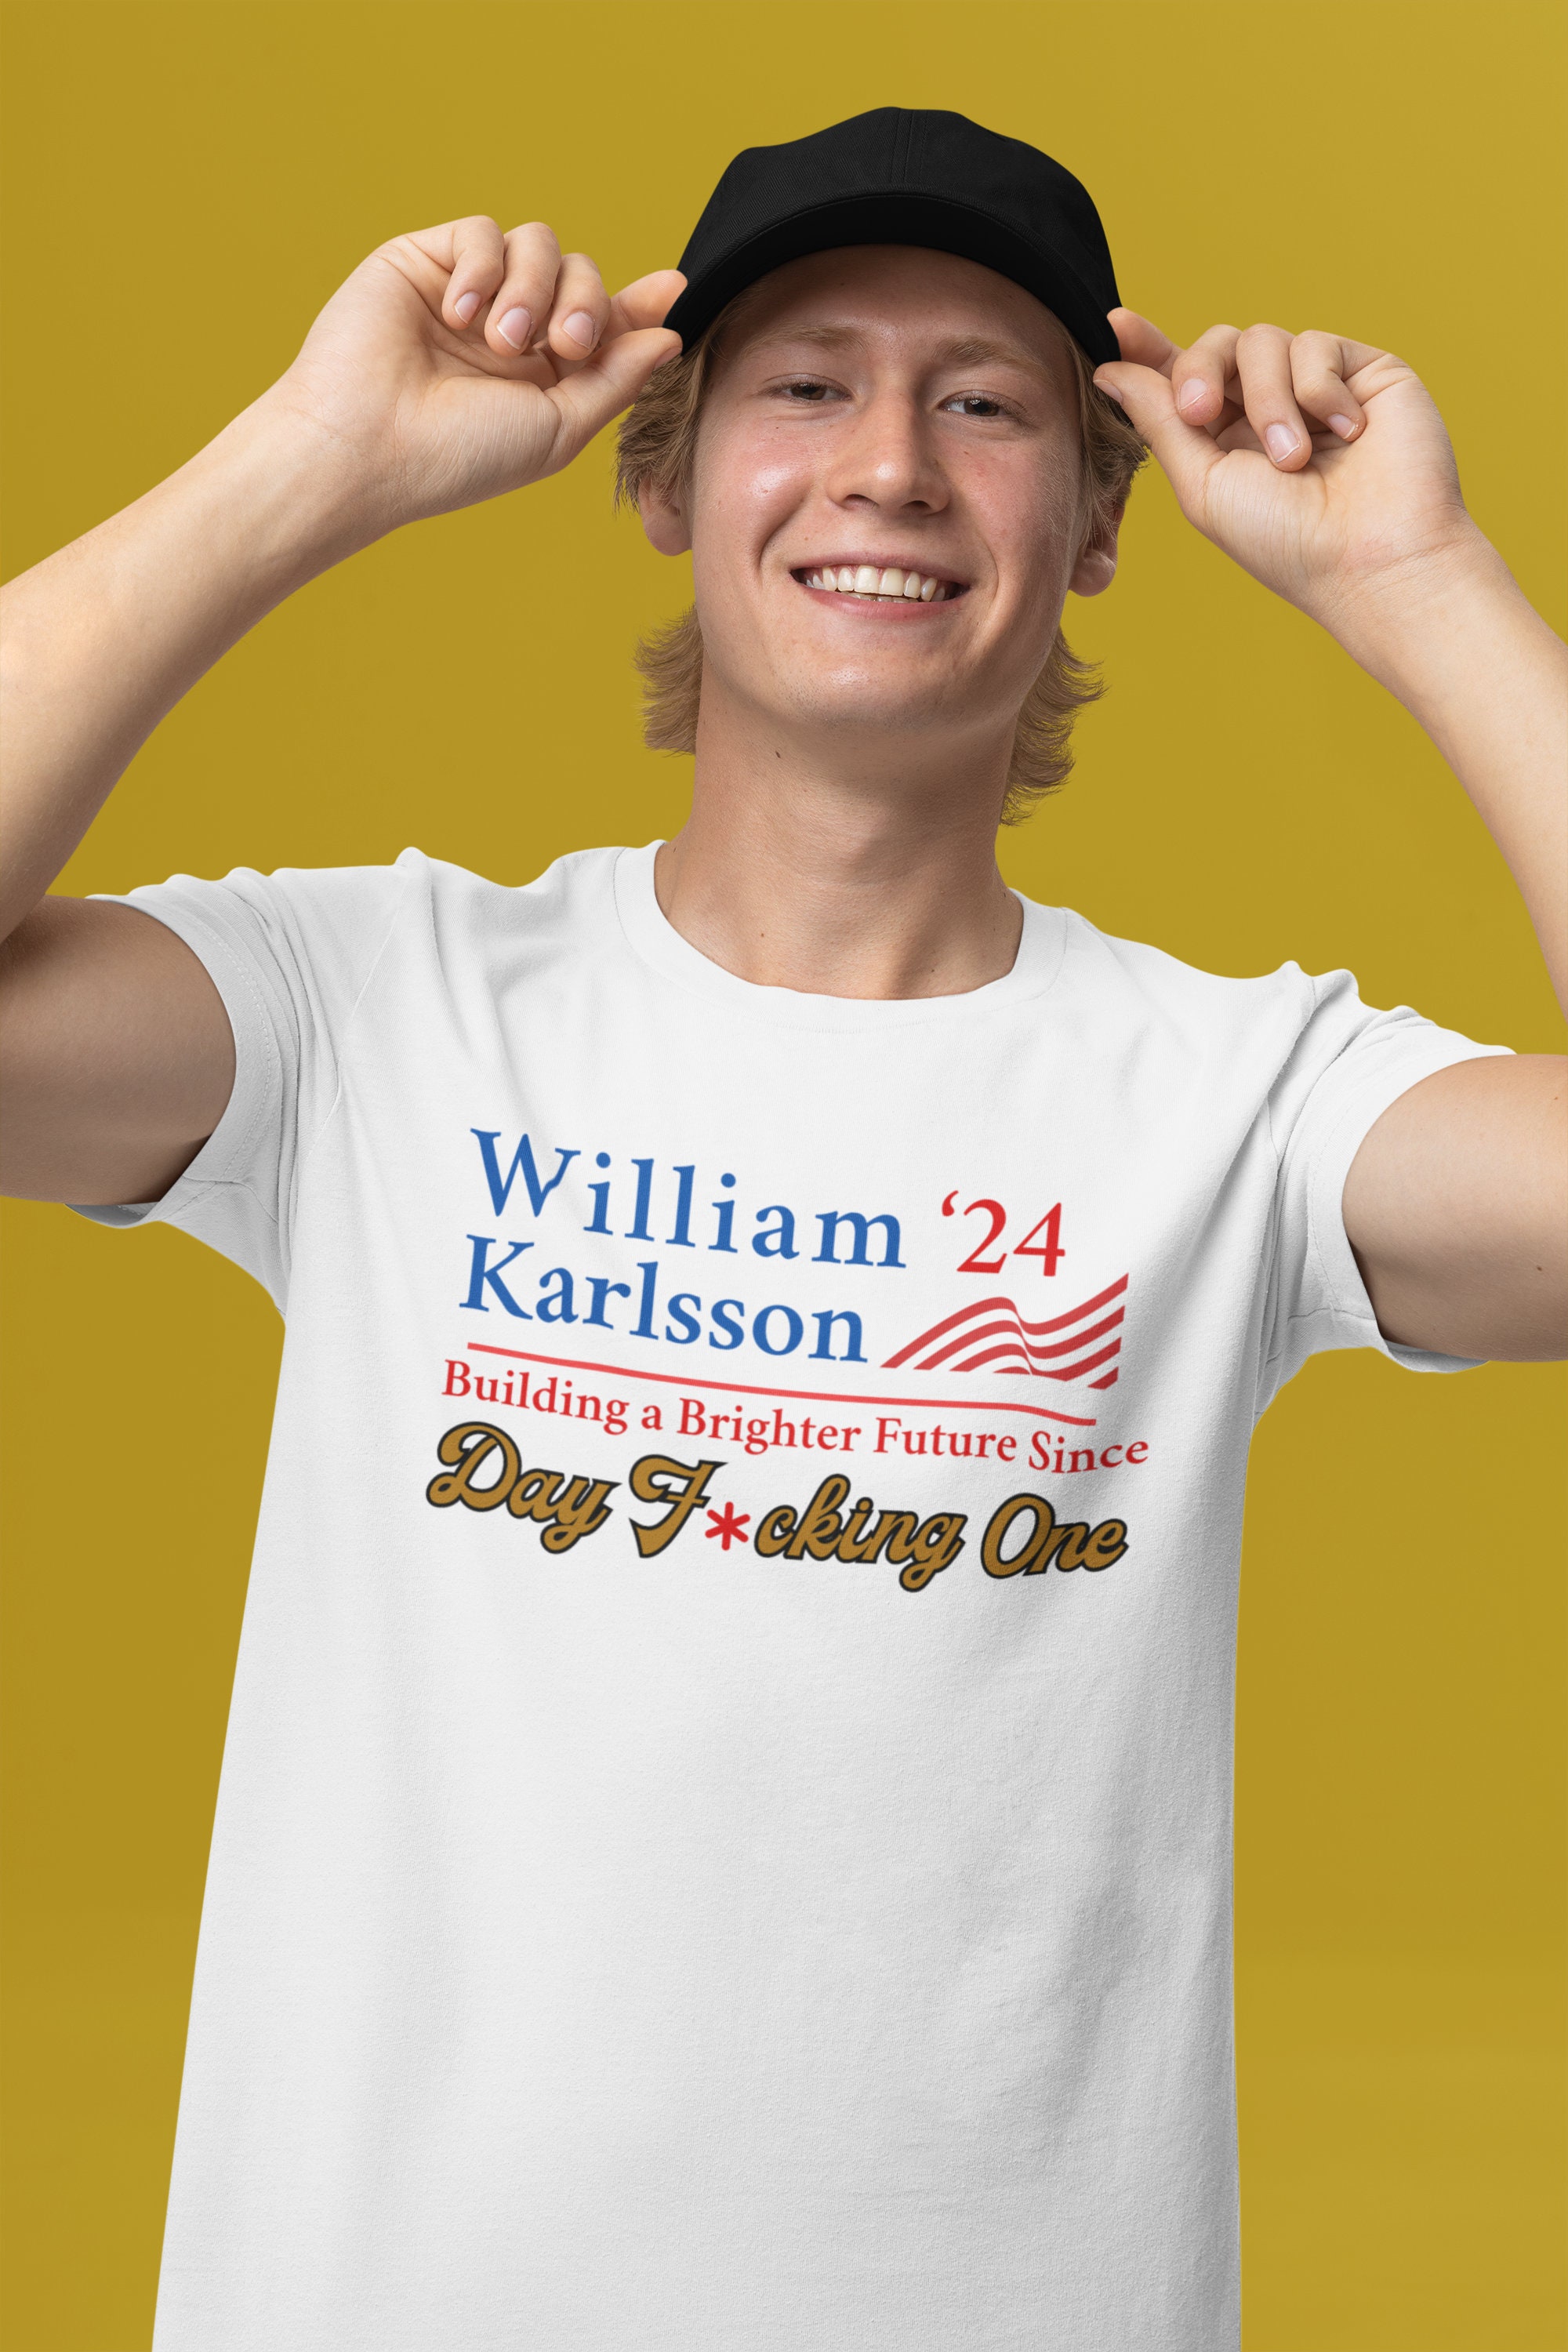 William Karlsson State Star Shirt, hoodie, sweater, long sleeve